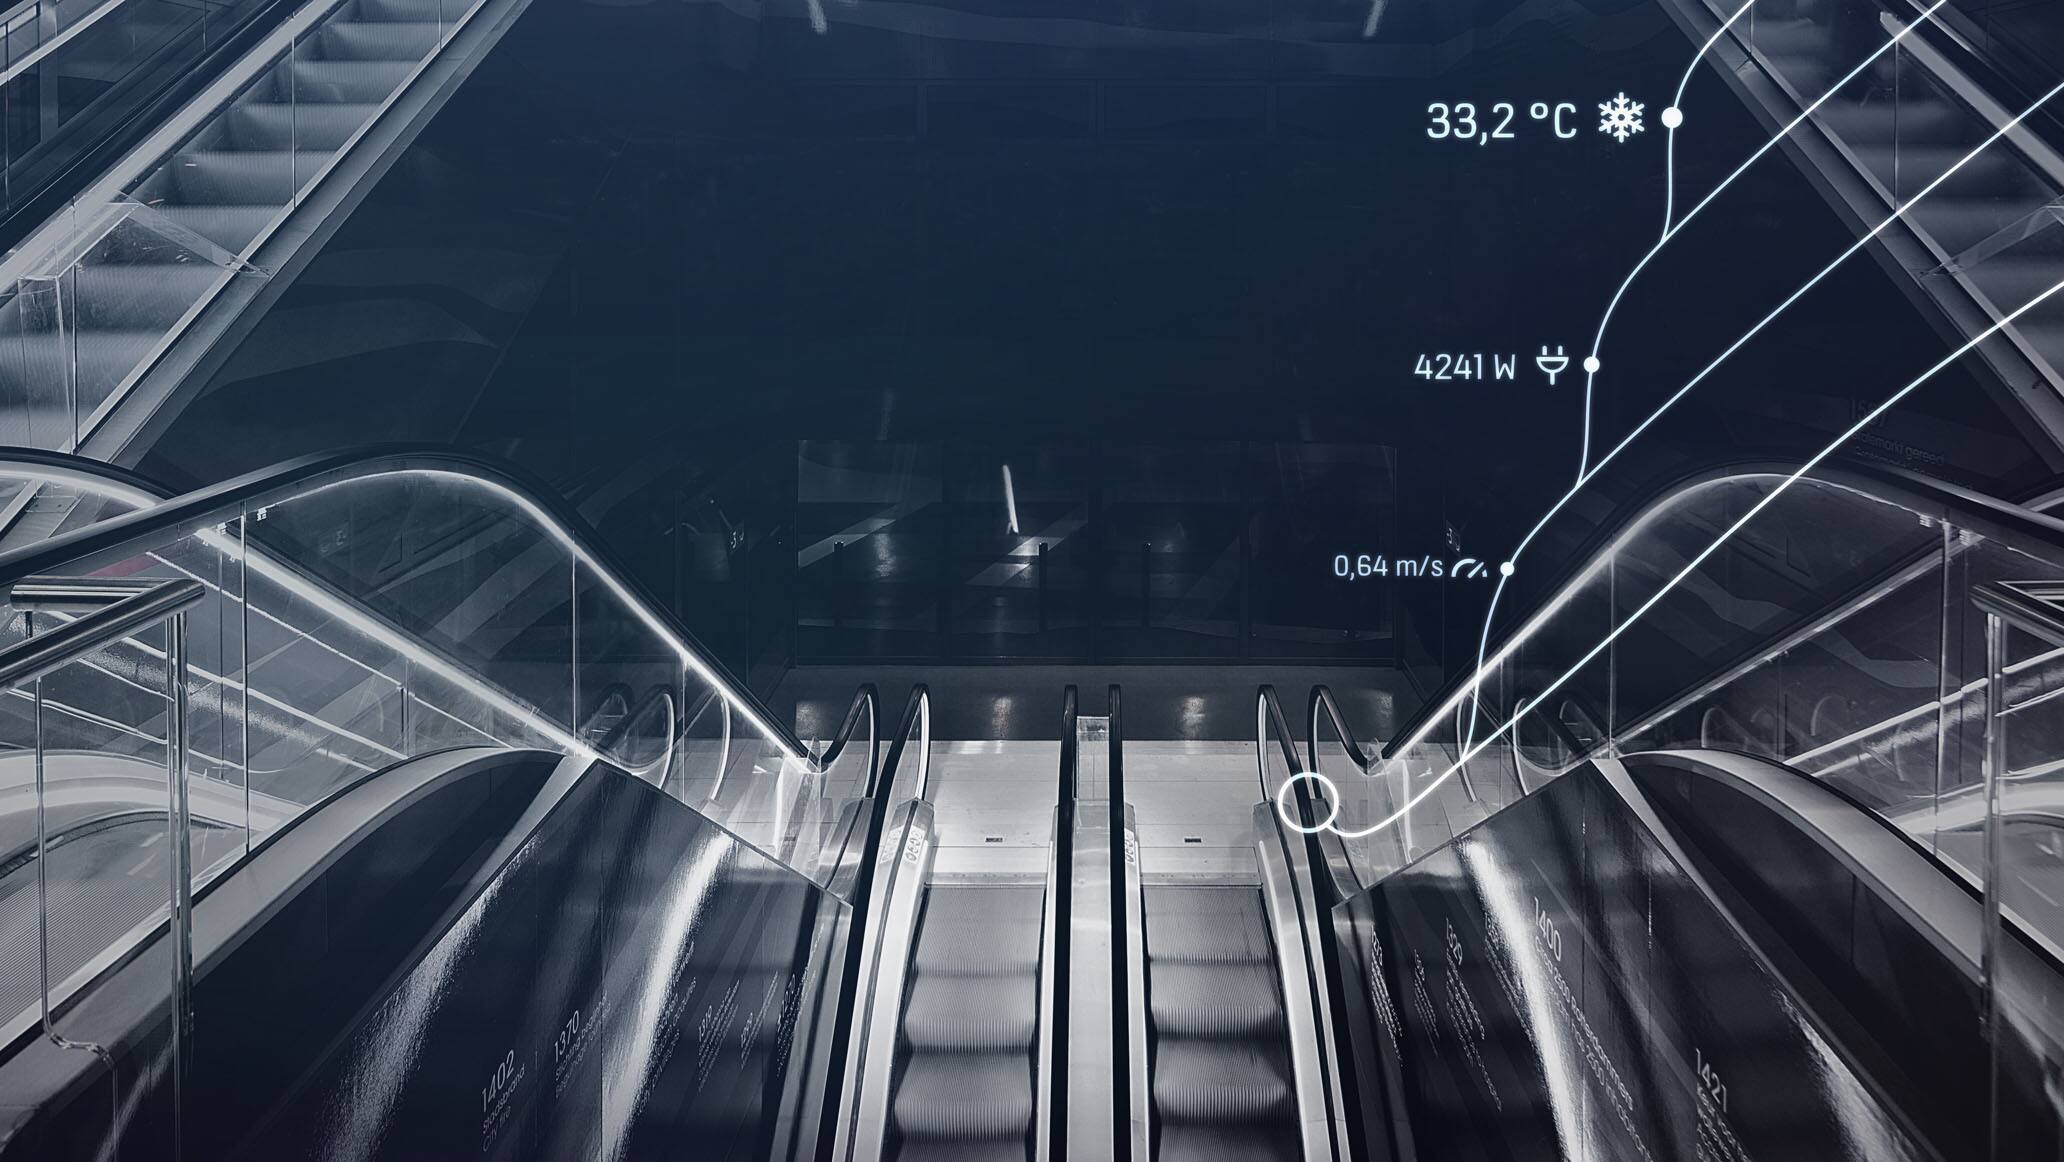 img_24/7-connected-escalator-680x383